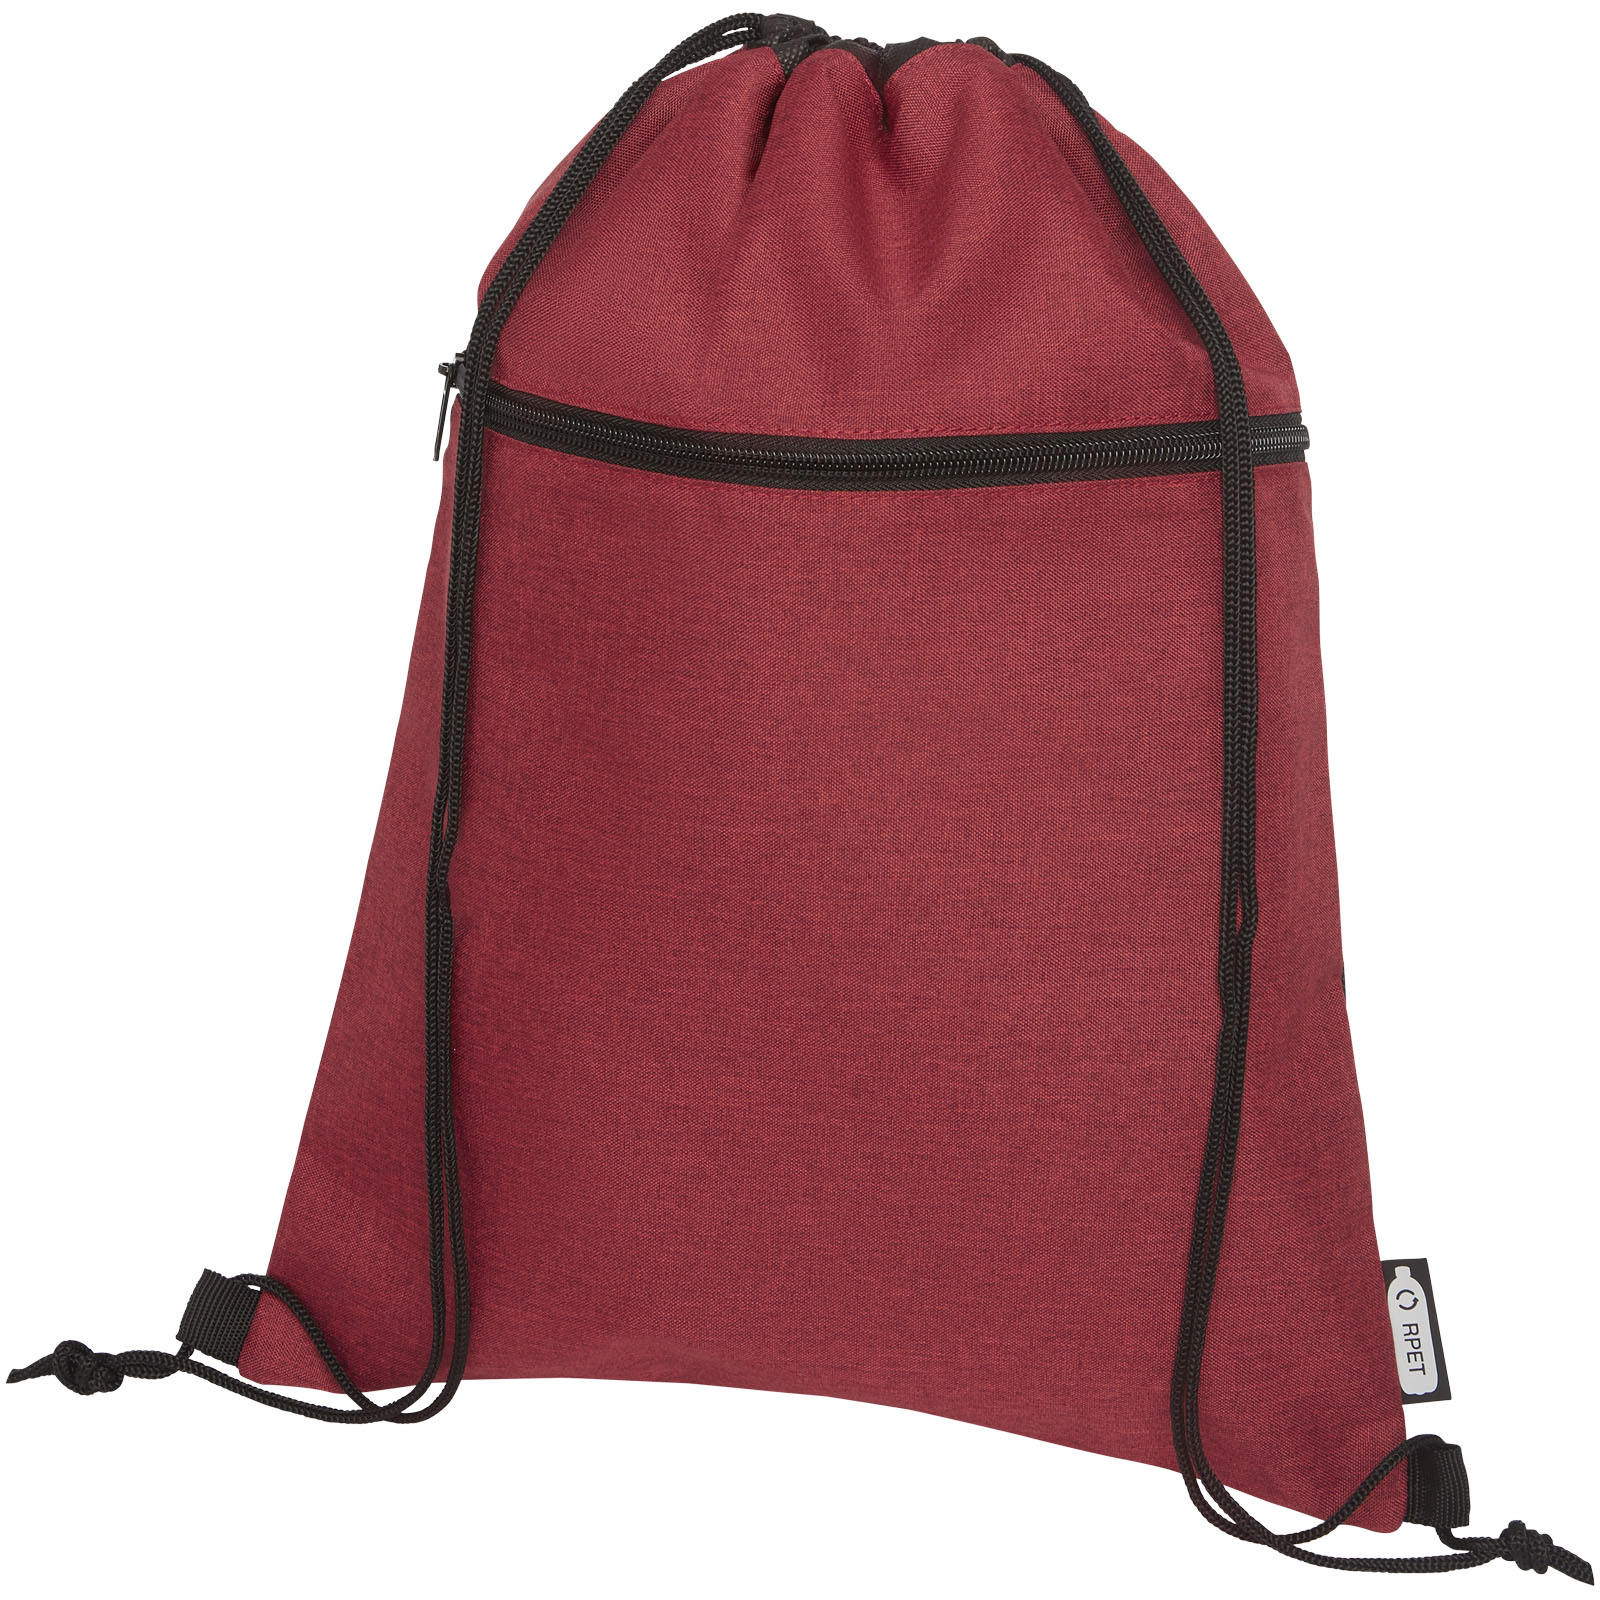 Drawstring Bags - Ross RPET drawstring bag 5L